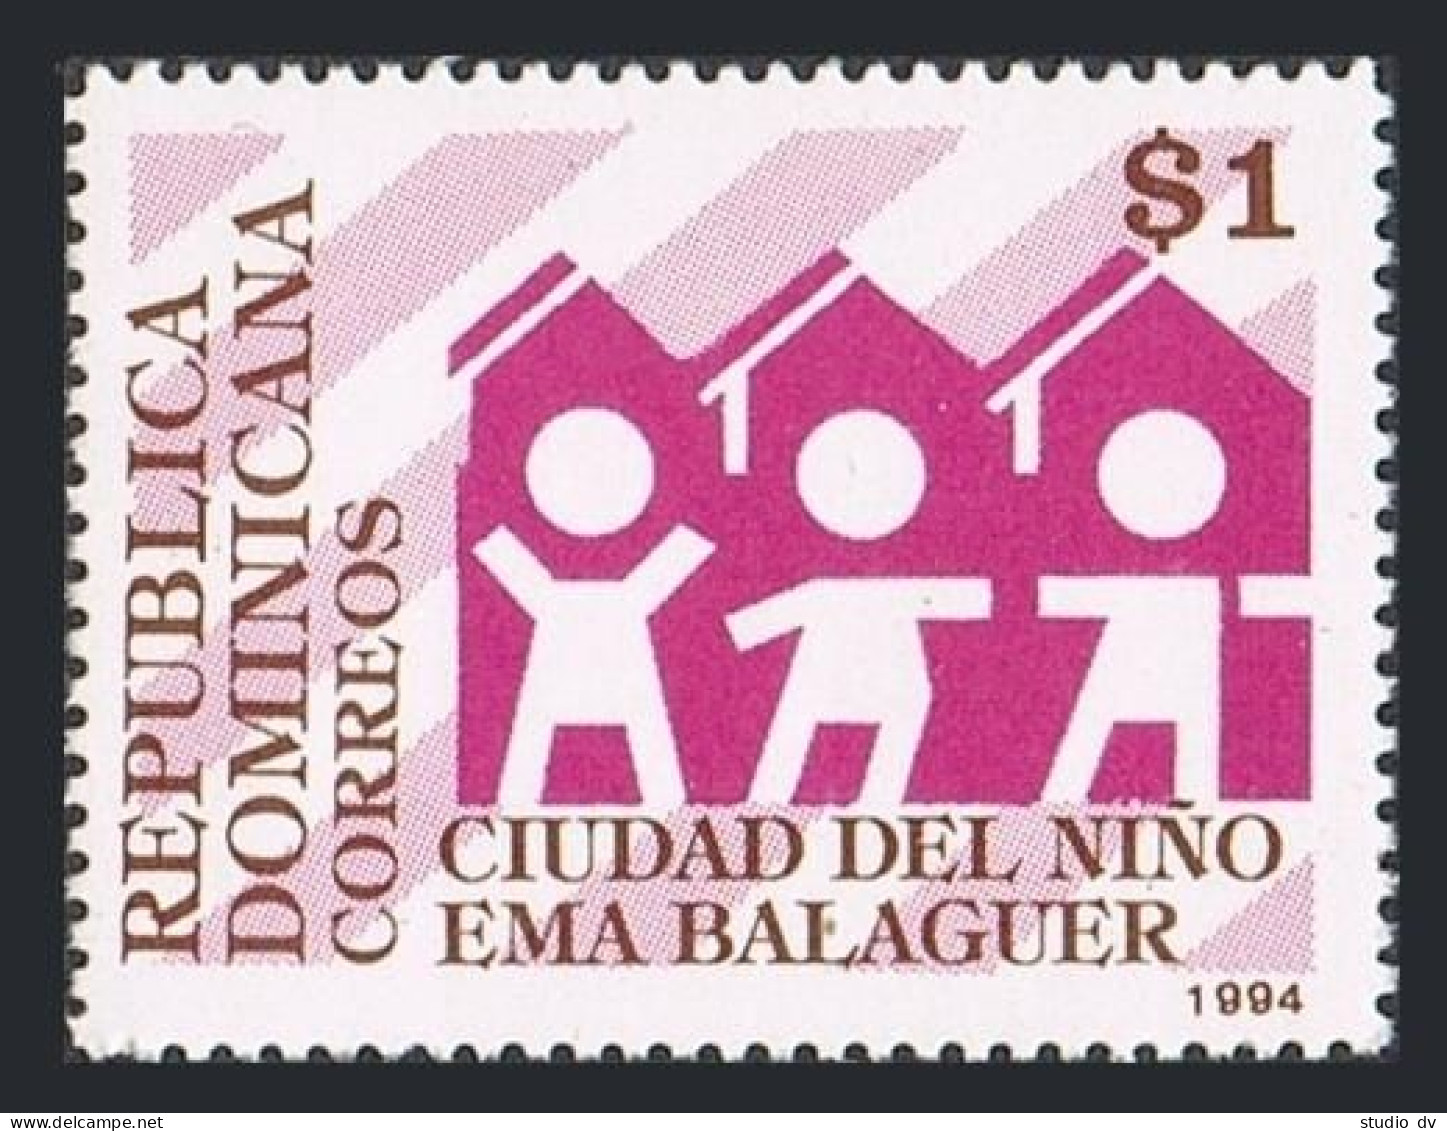 Dominican Rep 1165,MNH.Michel 1708. Ema Balaguer City Of Children,1994. - Dominican Republic